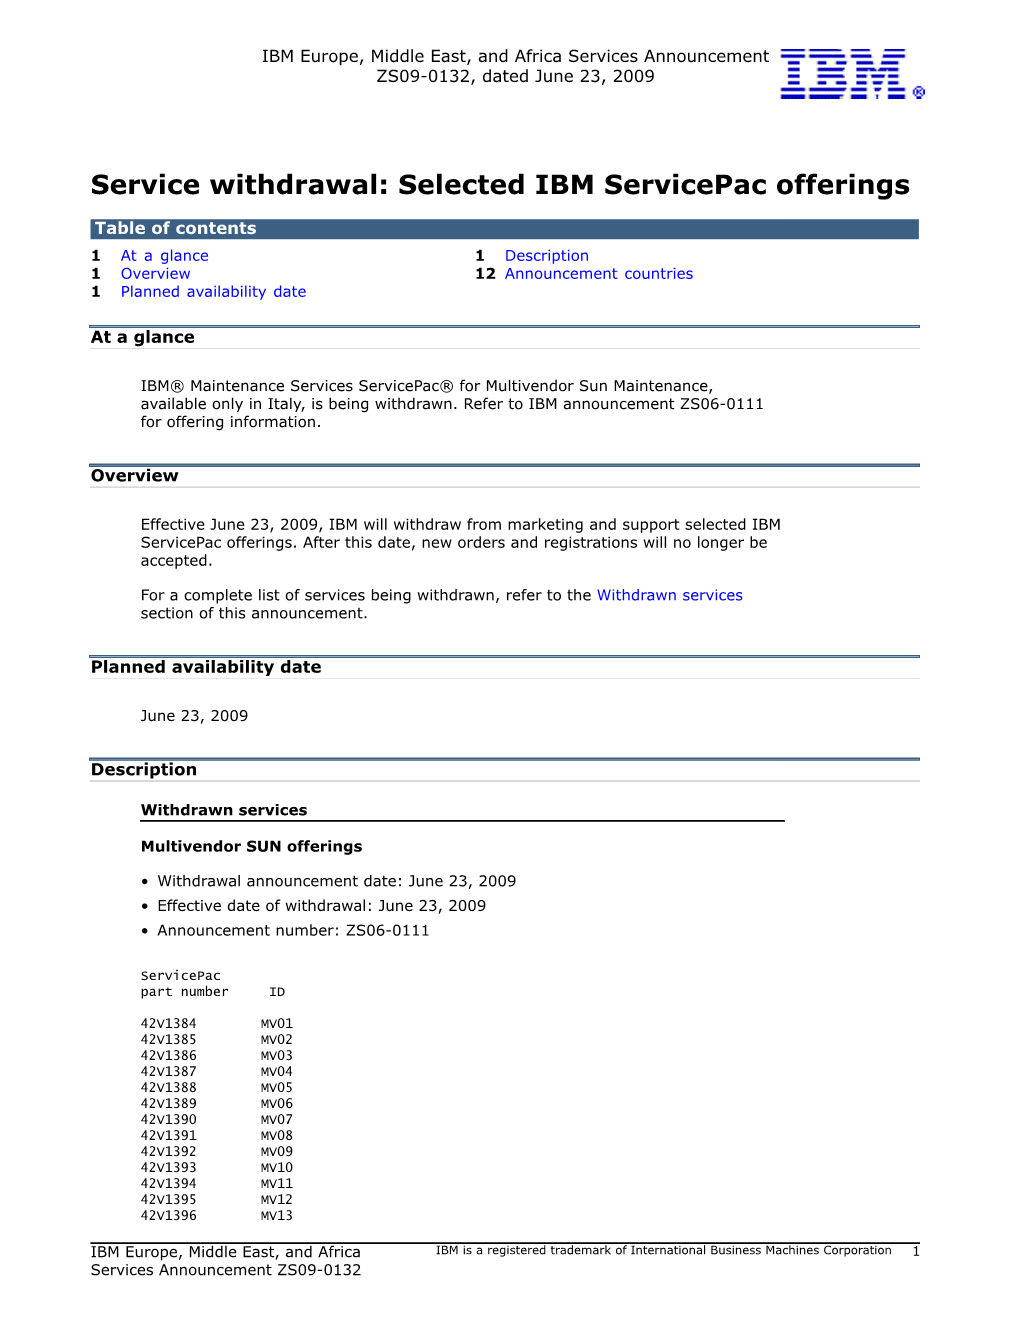 Service Withdrawal: Selected IBM Servicepac Offerings